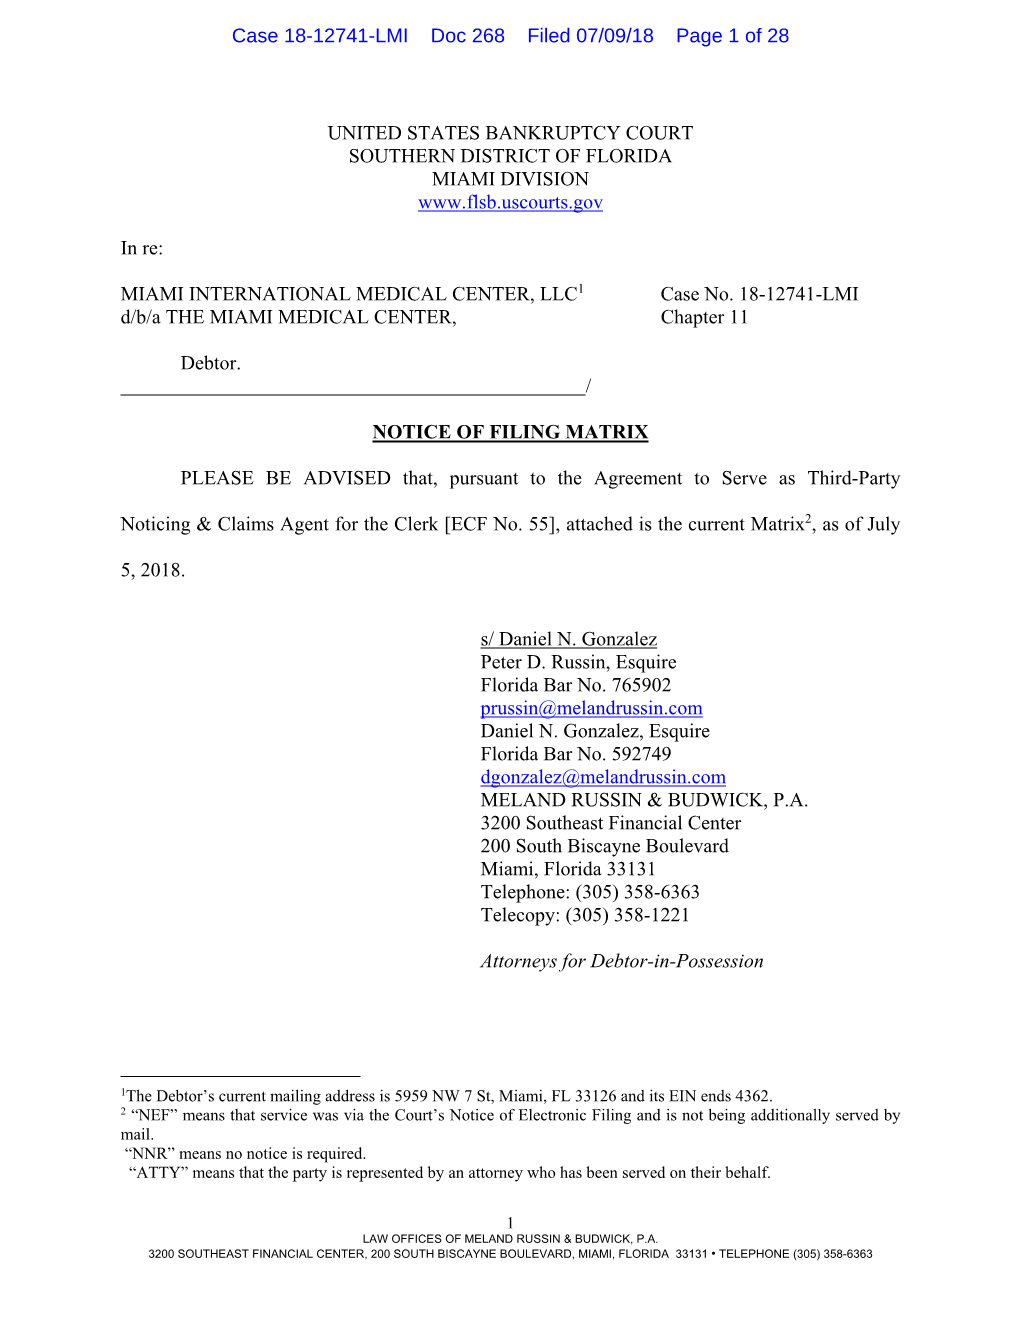 MIAMI INTERNATIONAL MEDICAL CENTER, LLC1 Case No